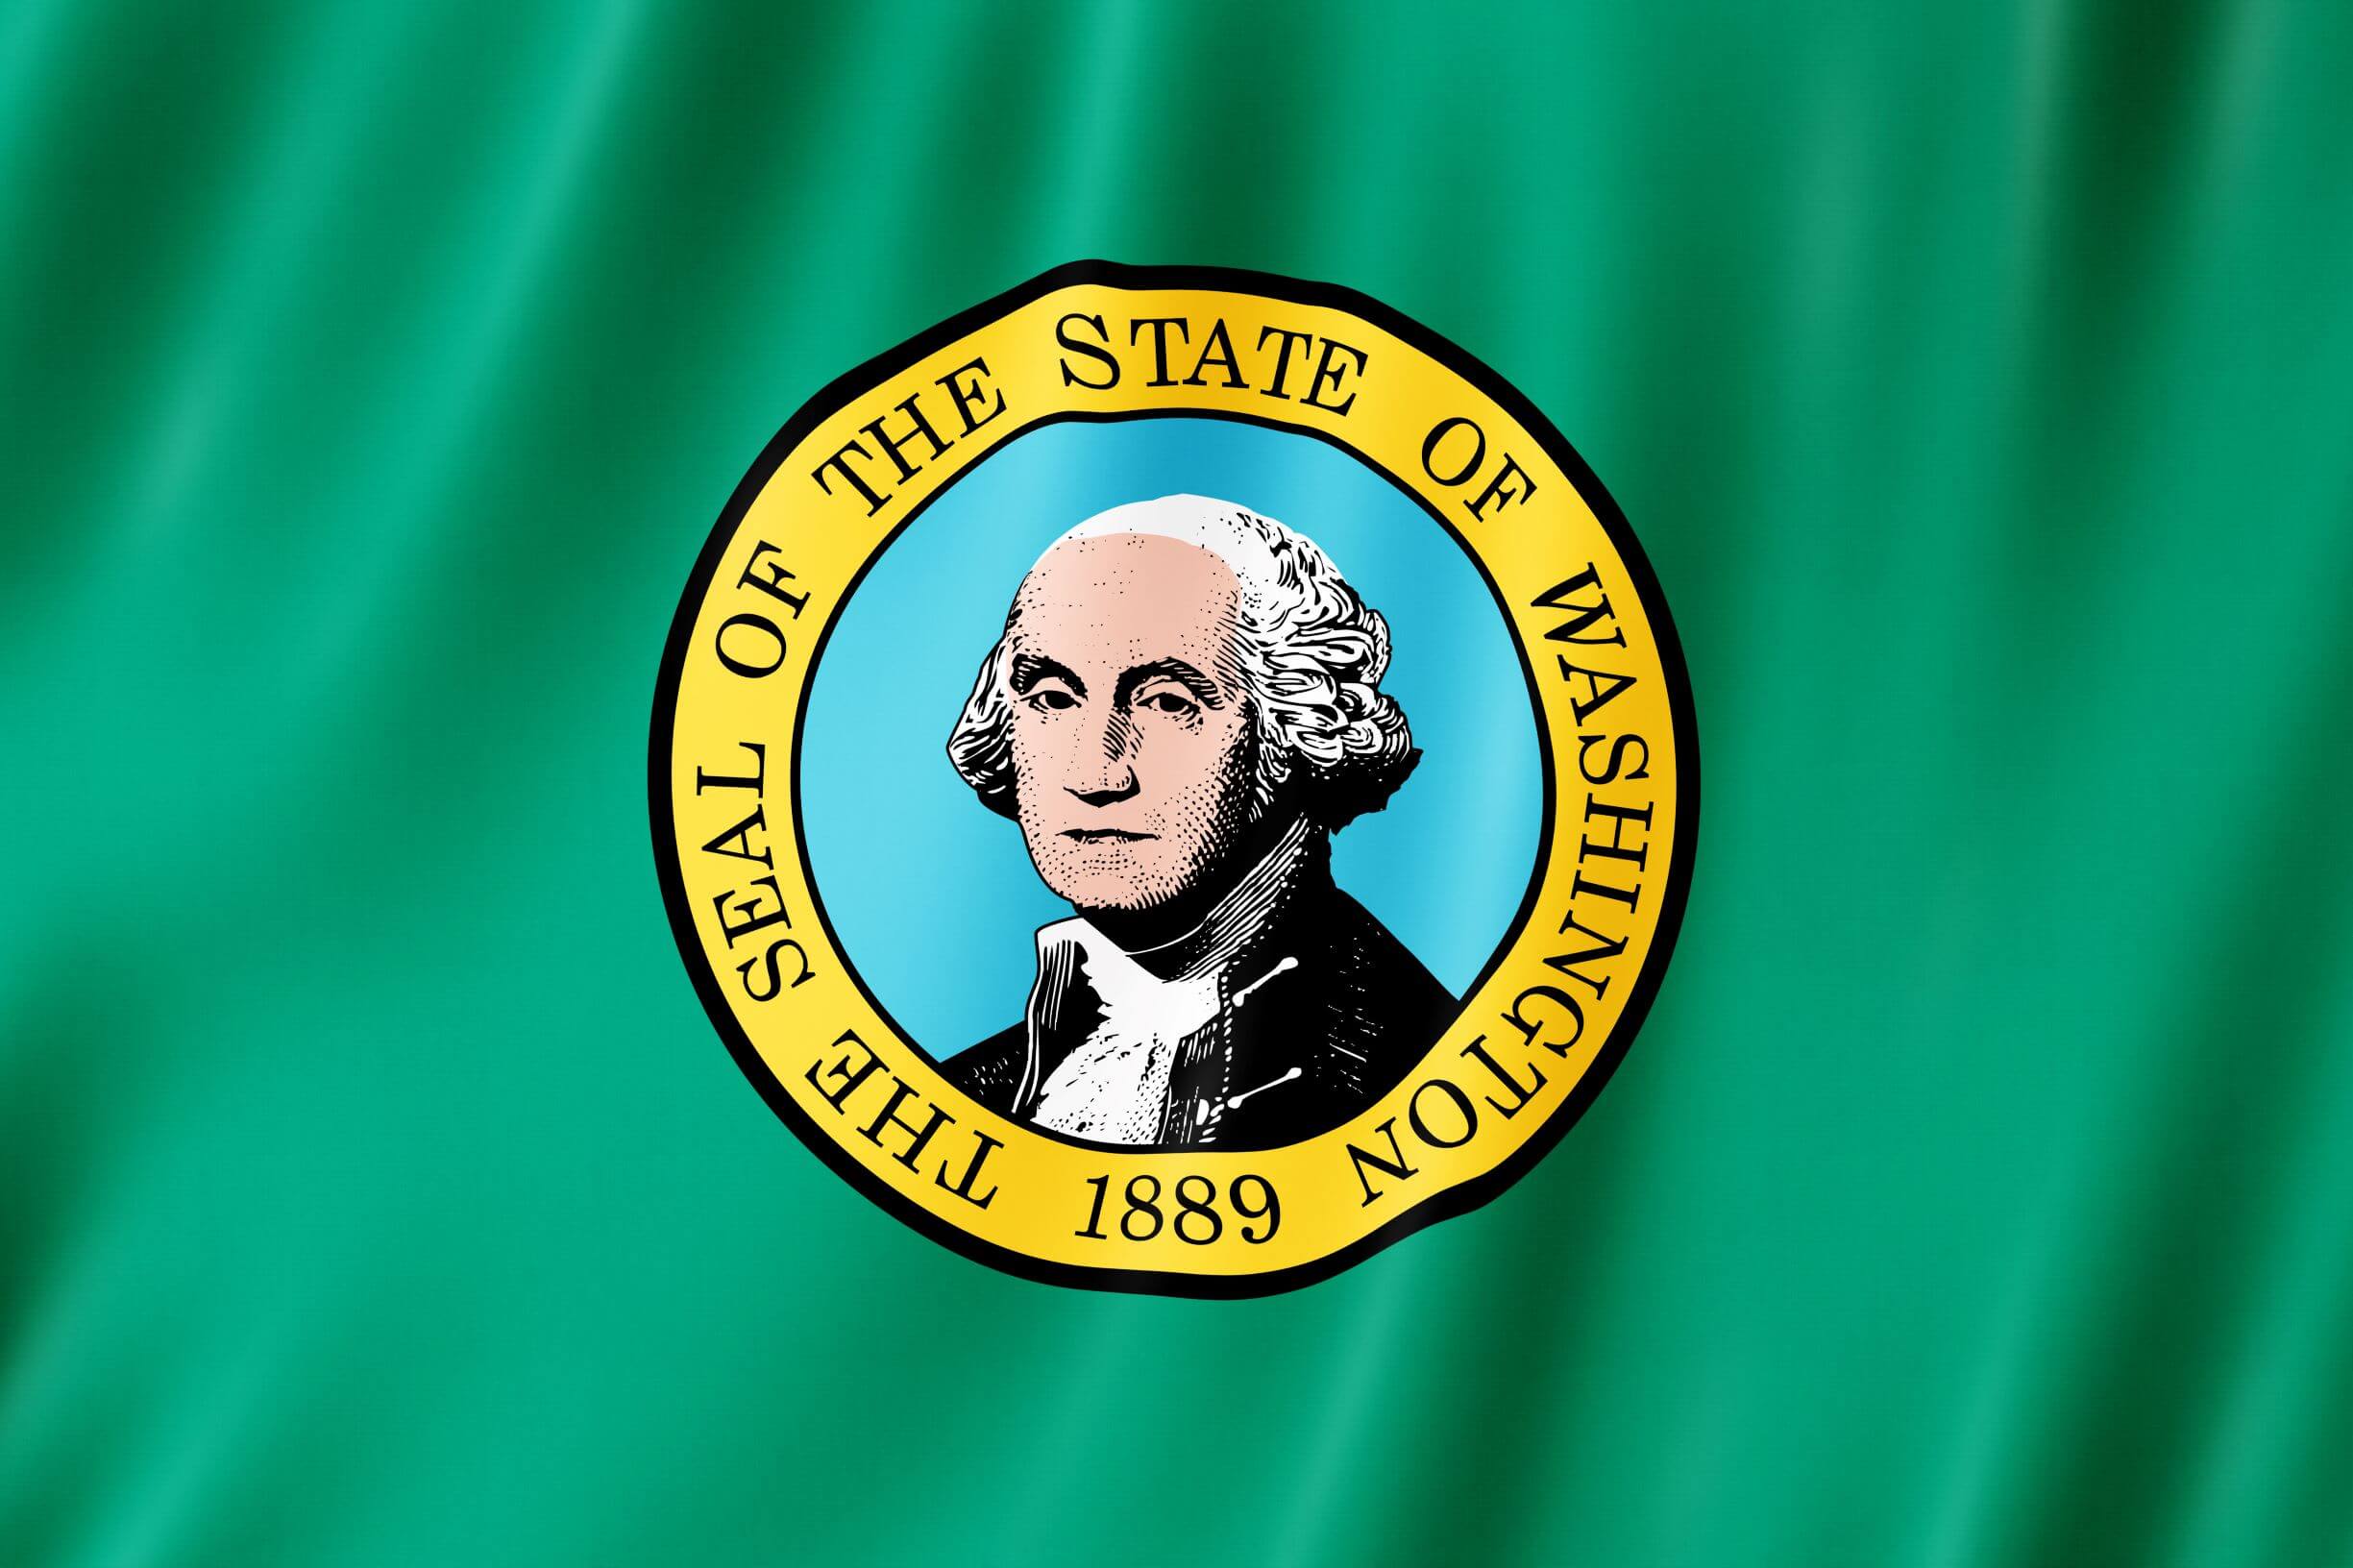 An image of the Washington state flag.